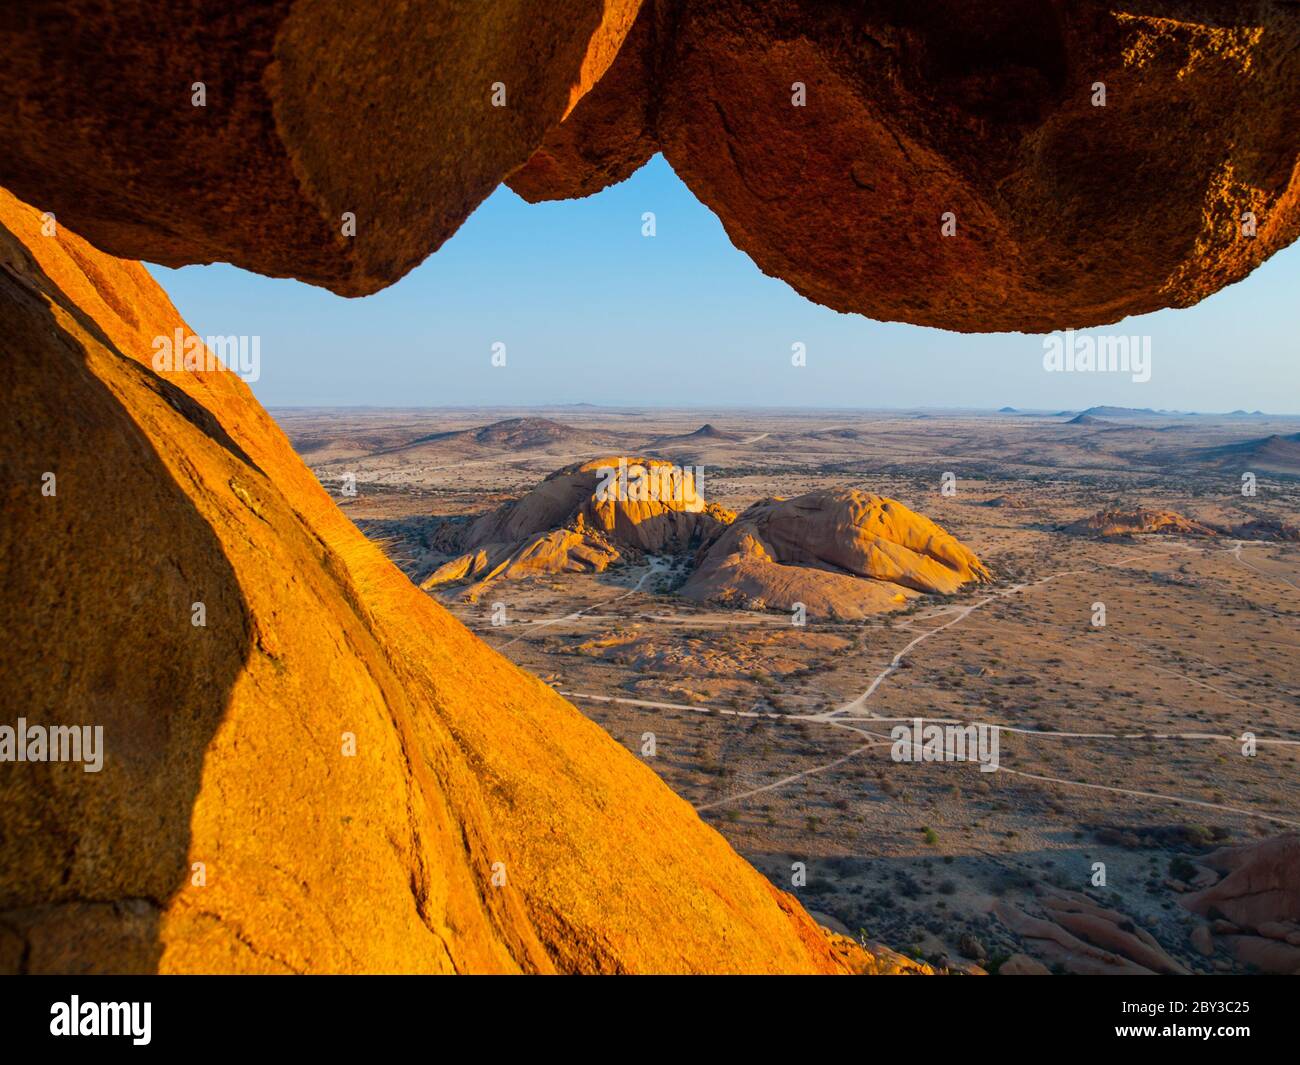 Massive granite rock formations, Spitzkoppe area, Namibia Stock Photo